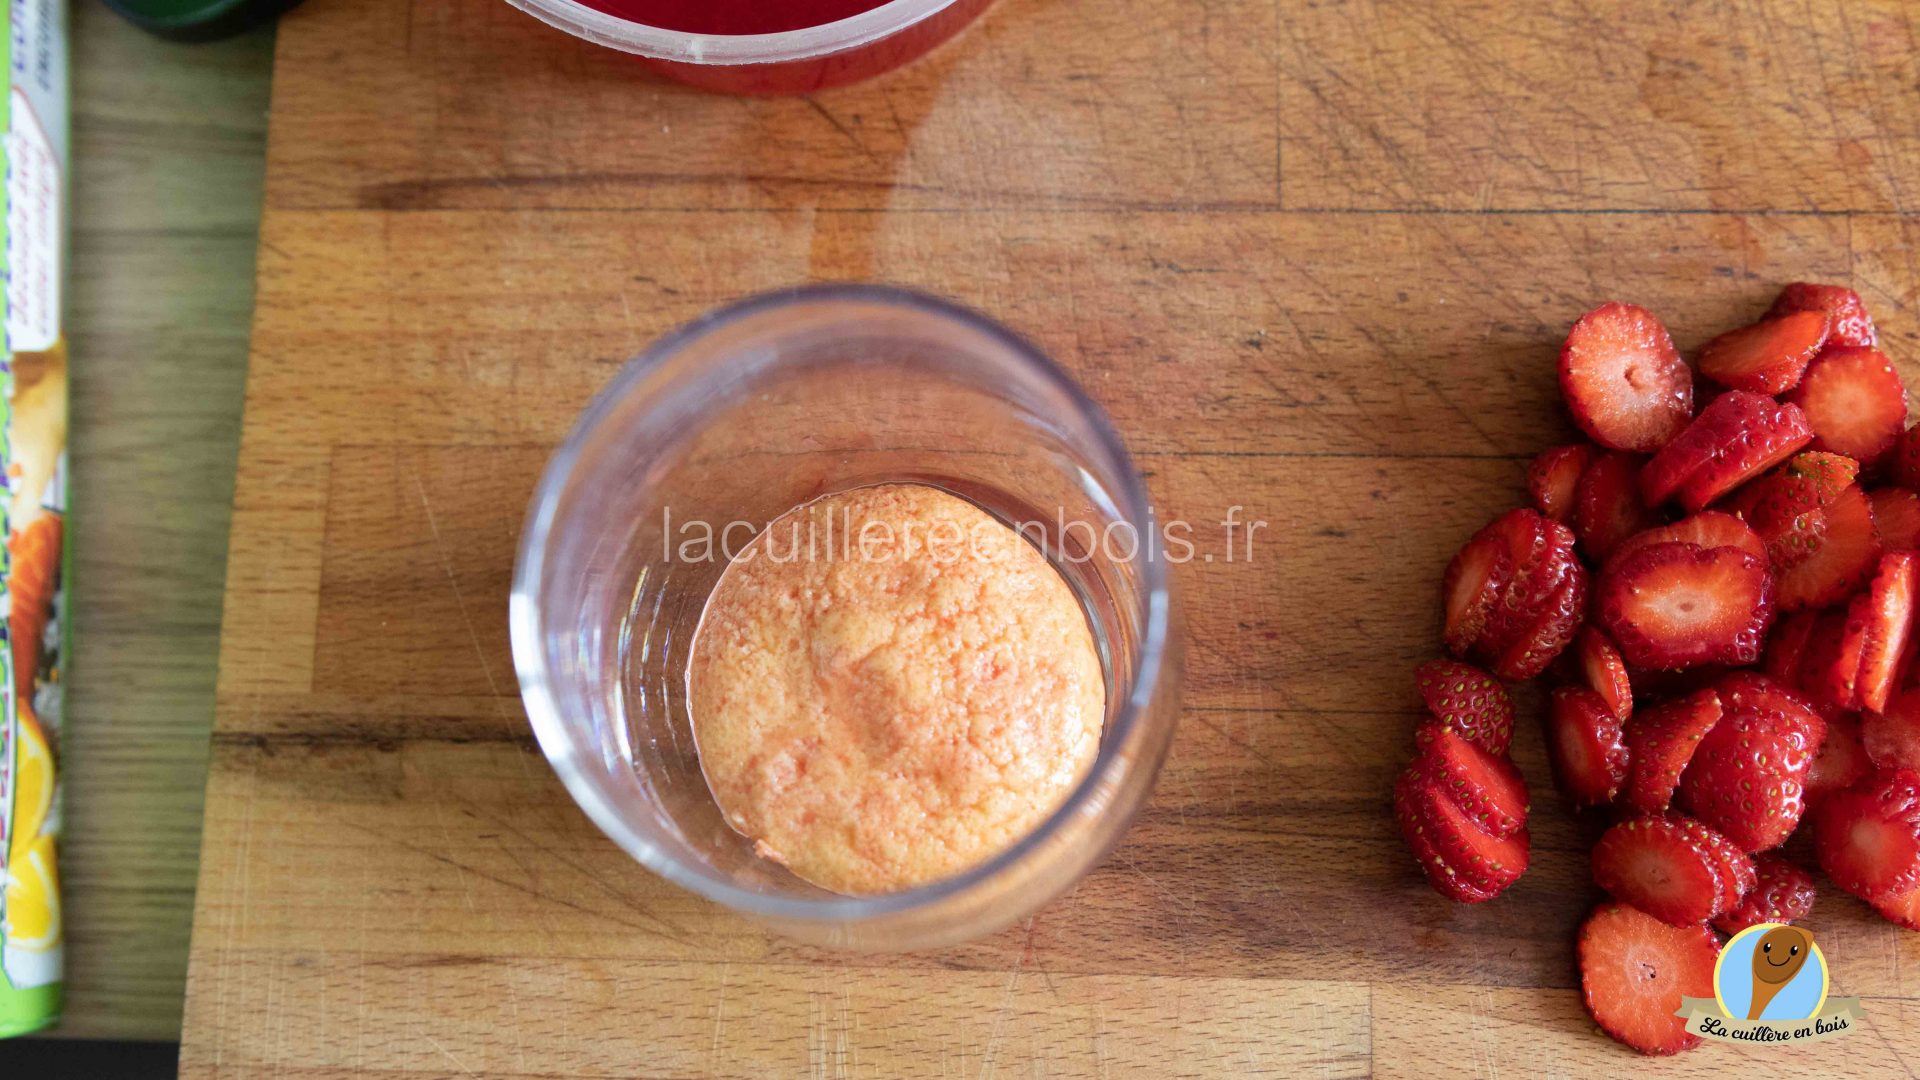 lacuillereenbois.fr-tiramisu fraise et menthe